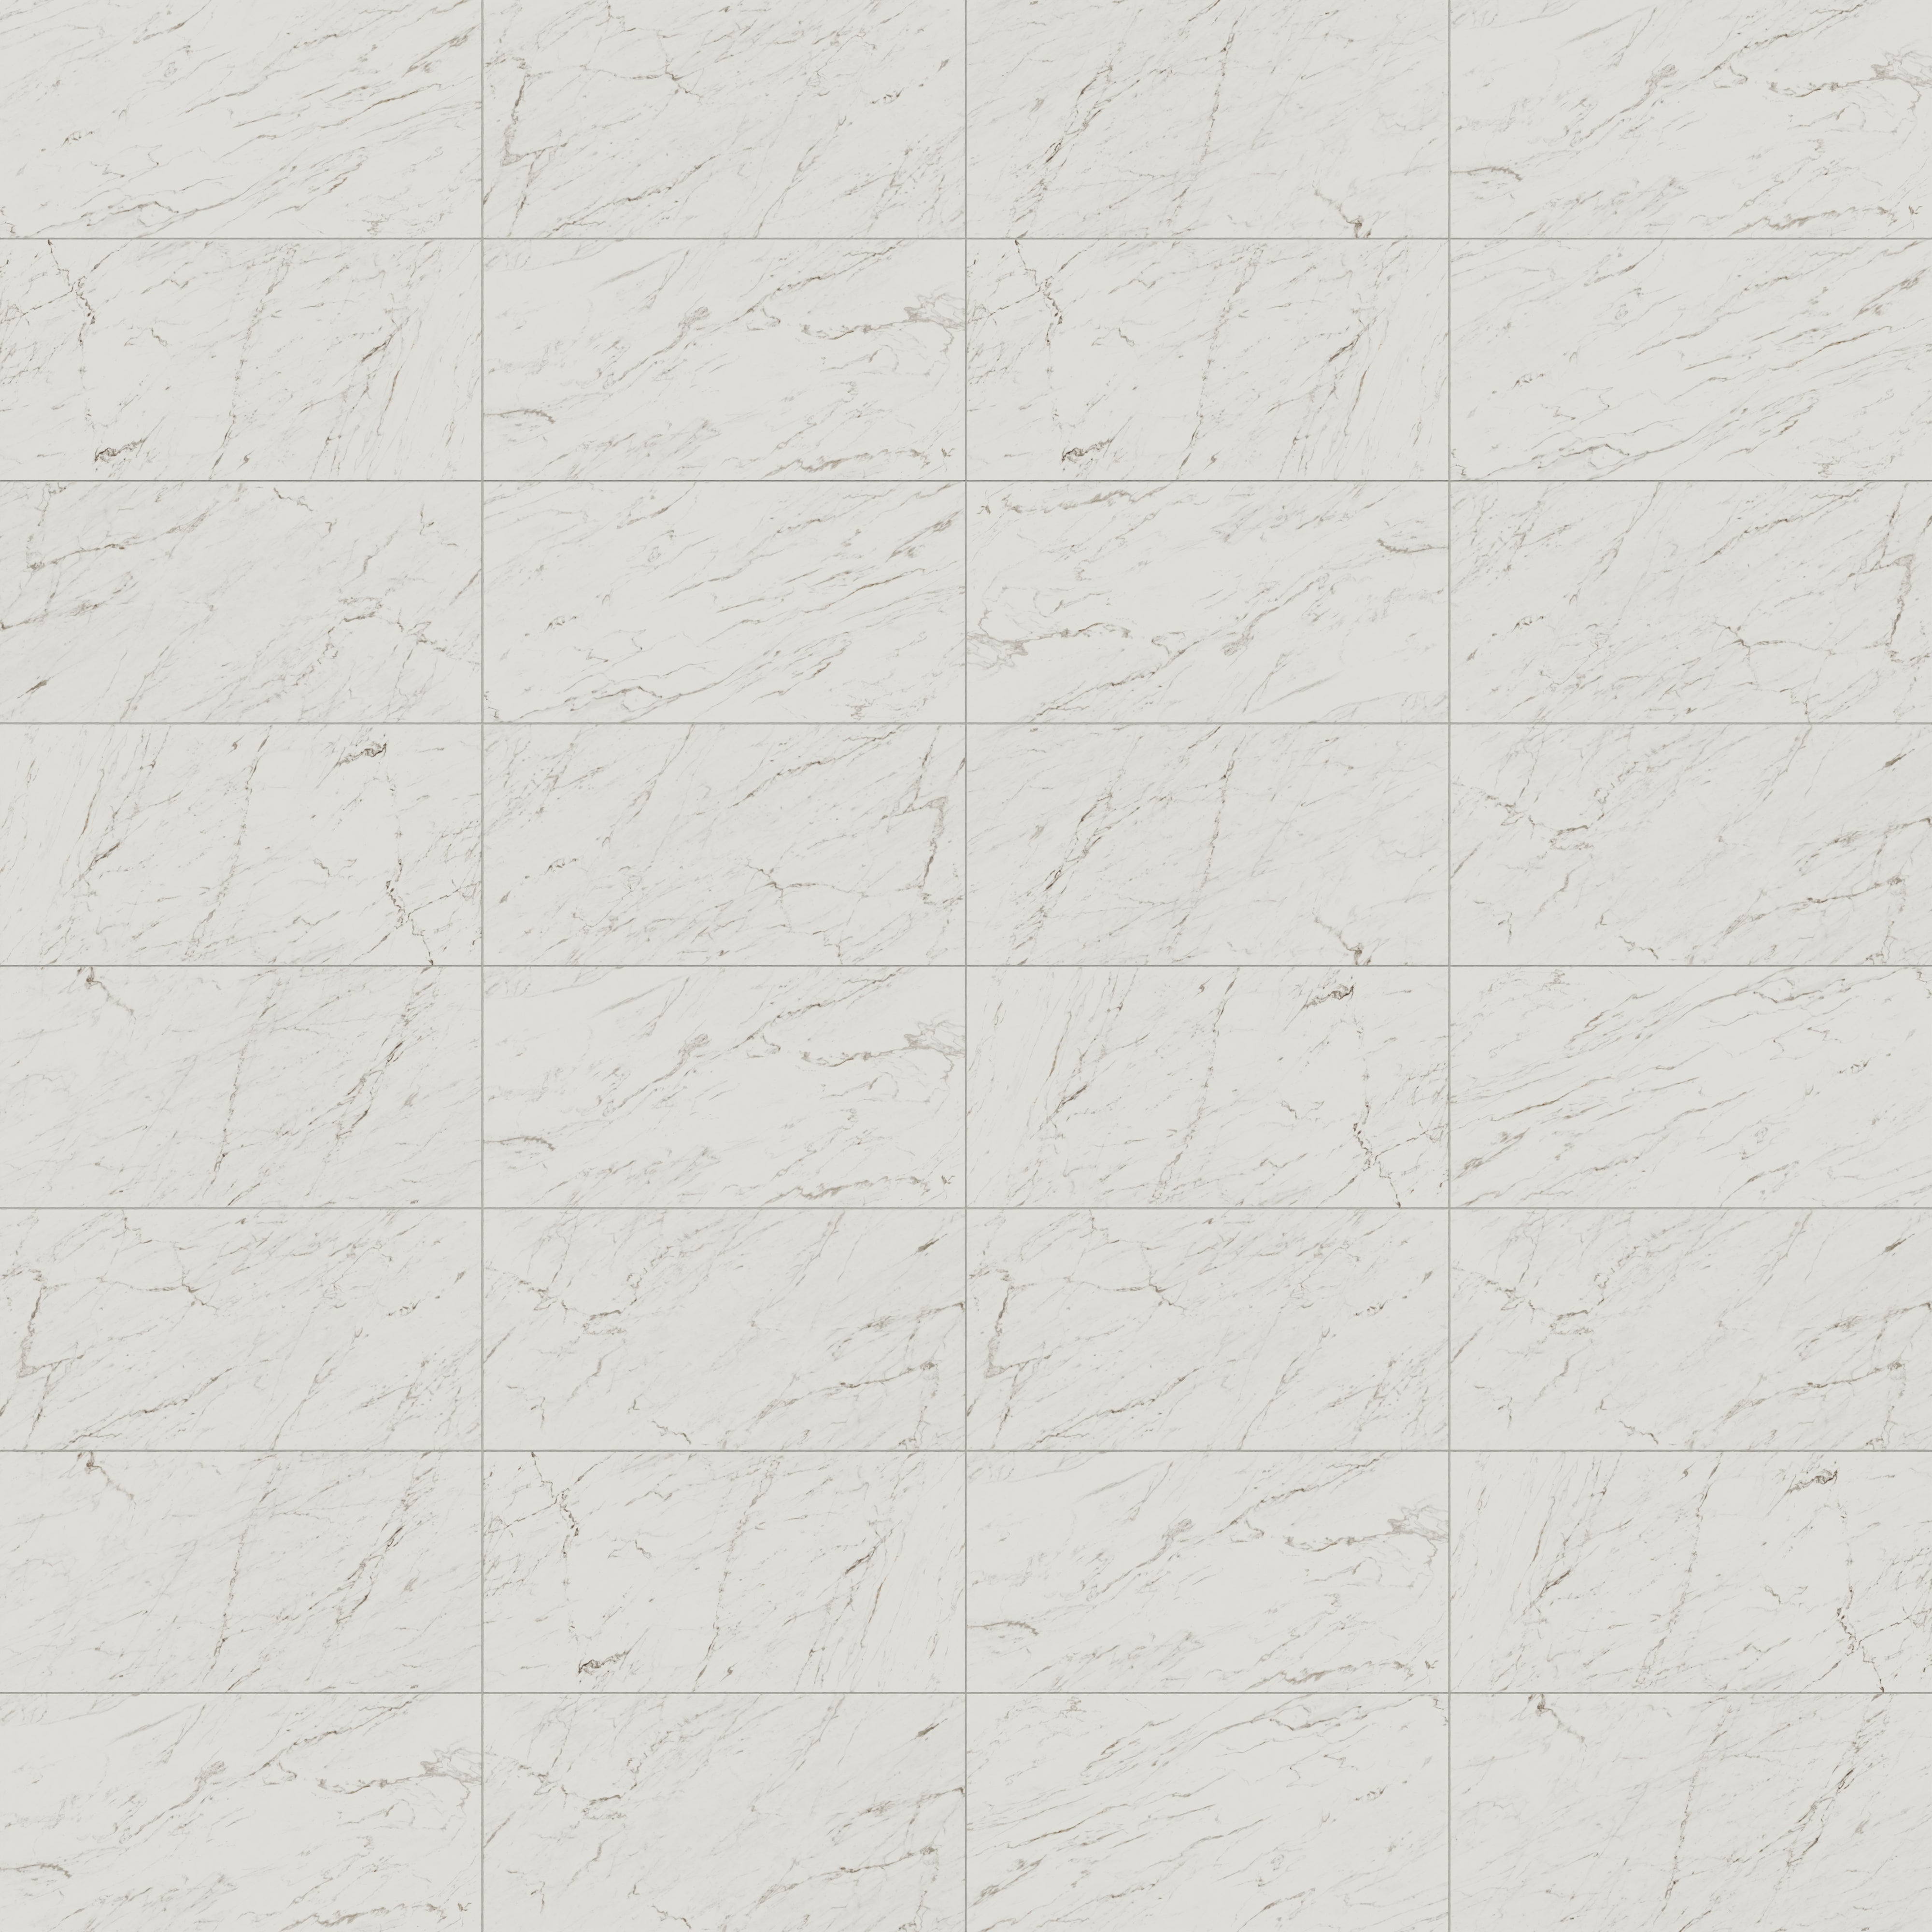 Blair 24x48 Polished Porcelain Tile in White Carrara